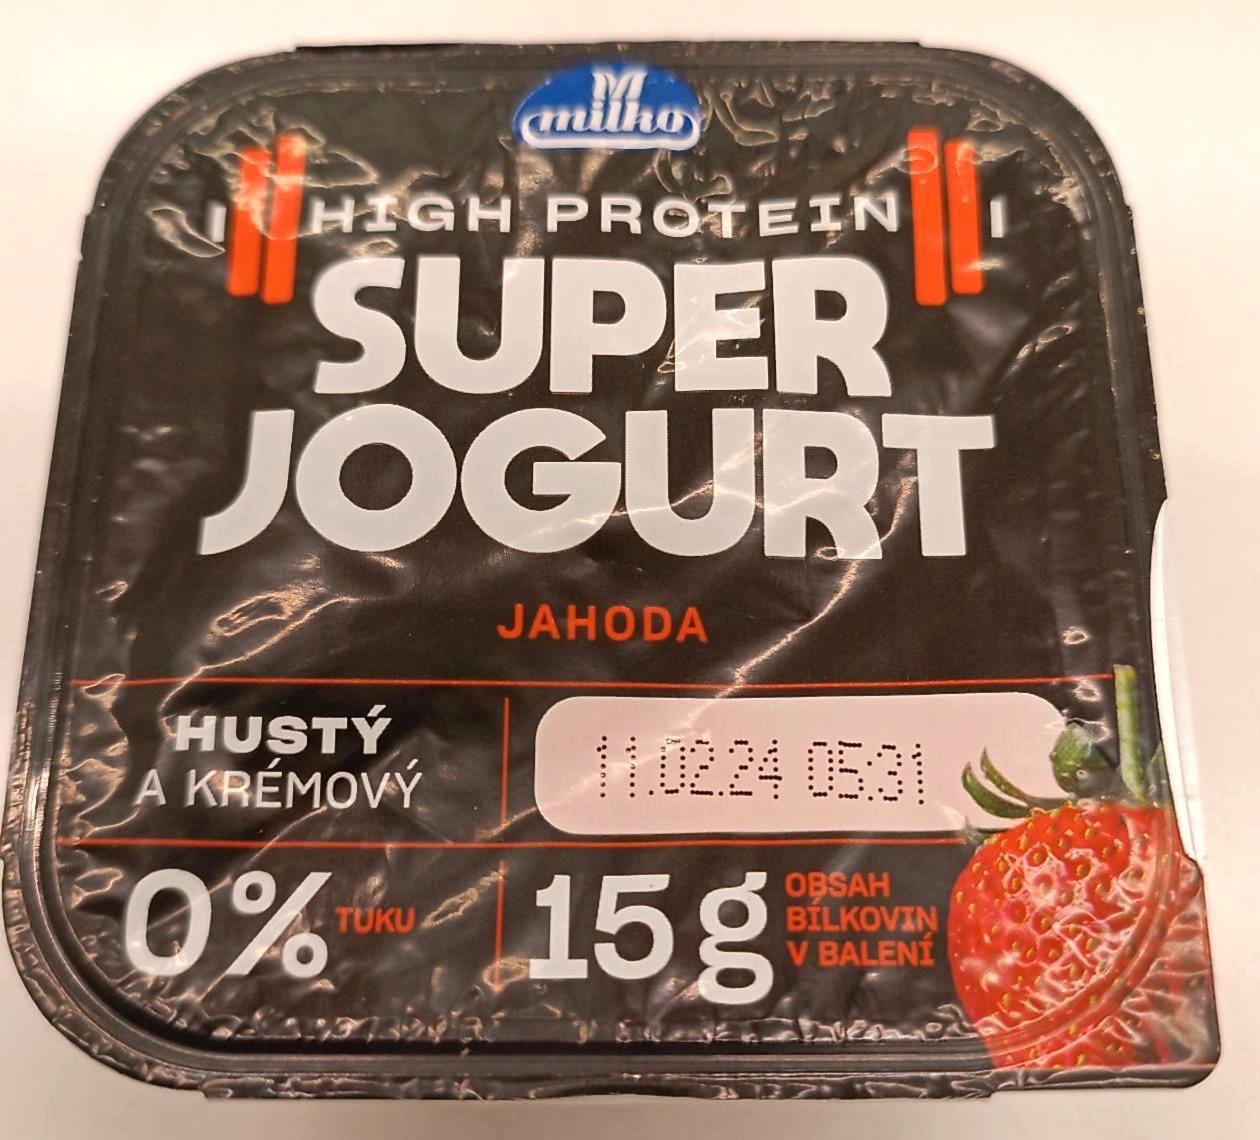 Képek - High protein super jogurt Jahoda Milko